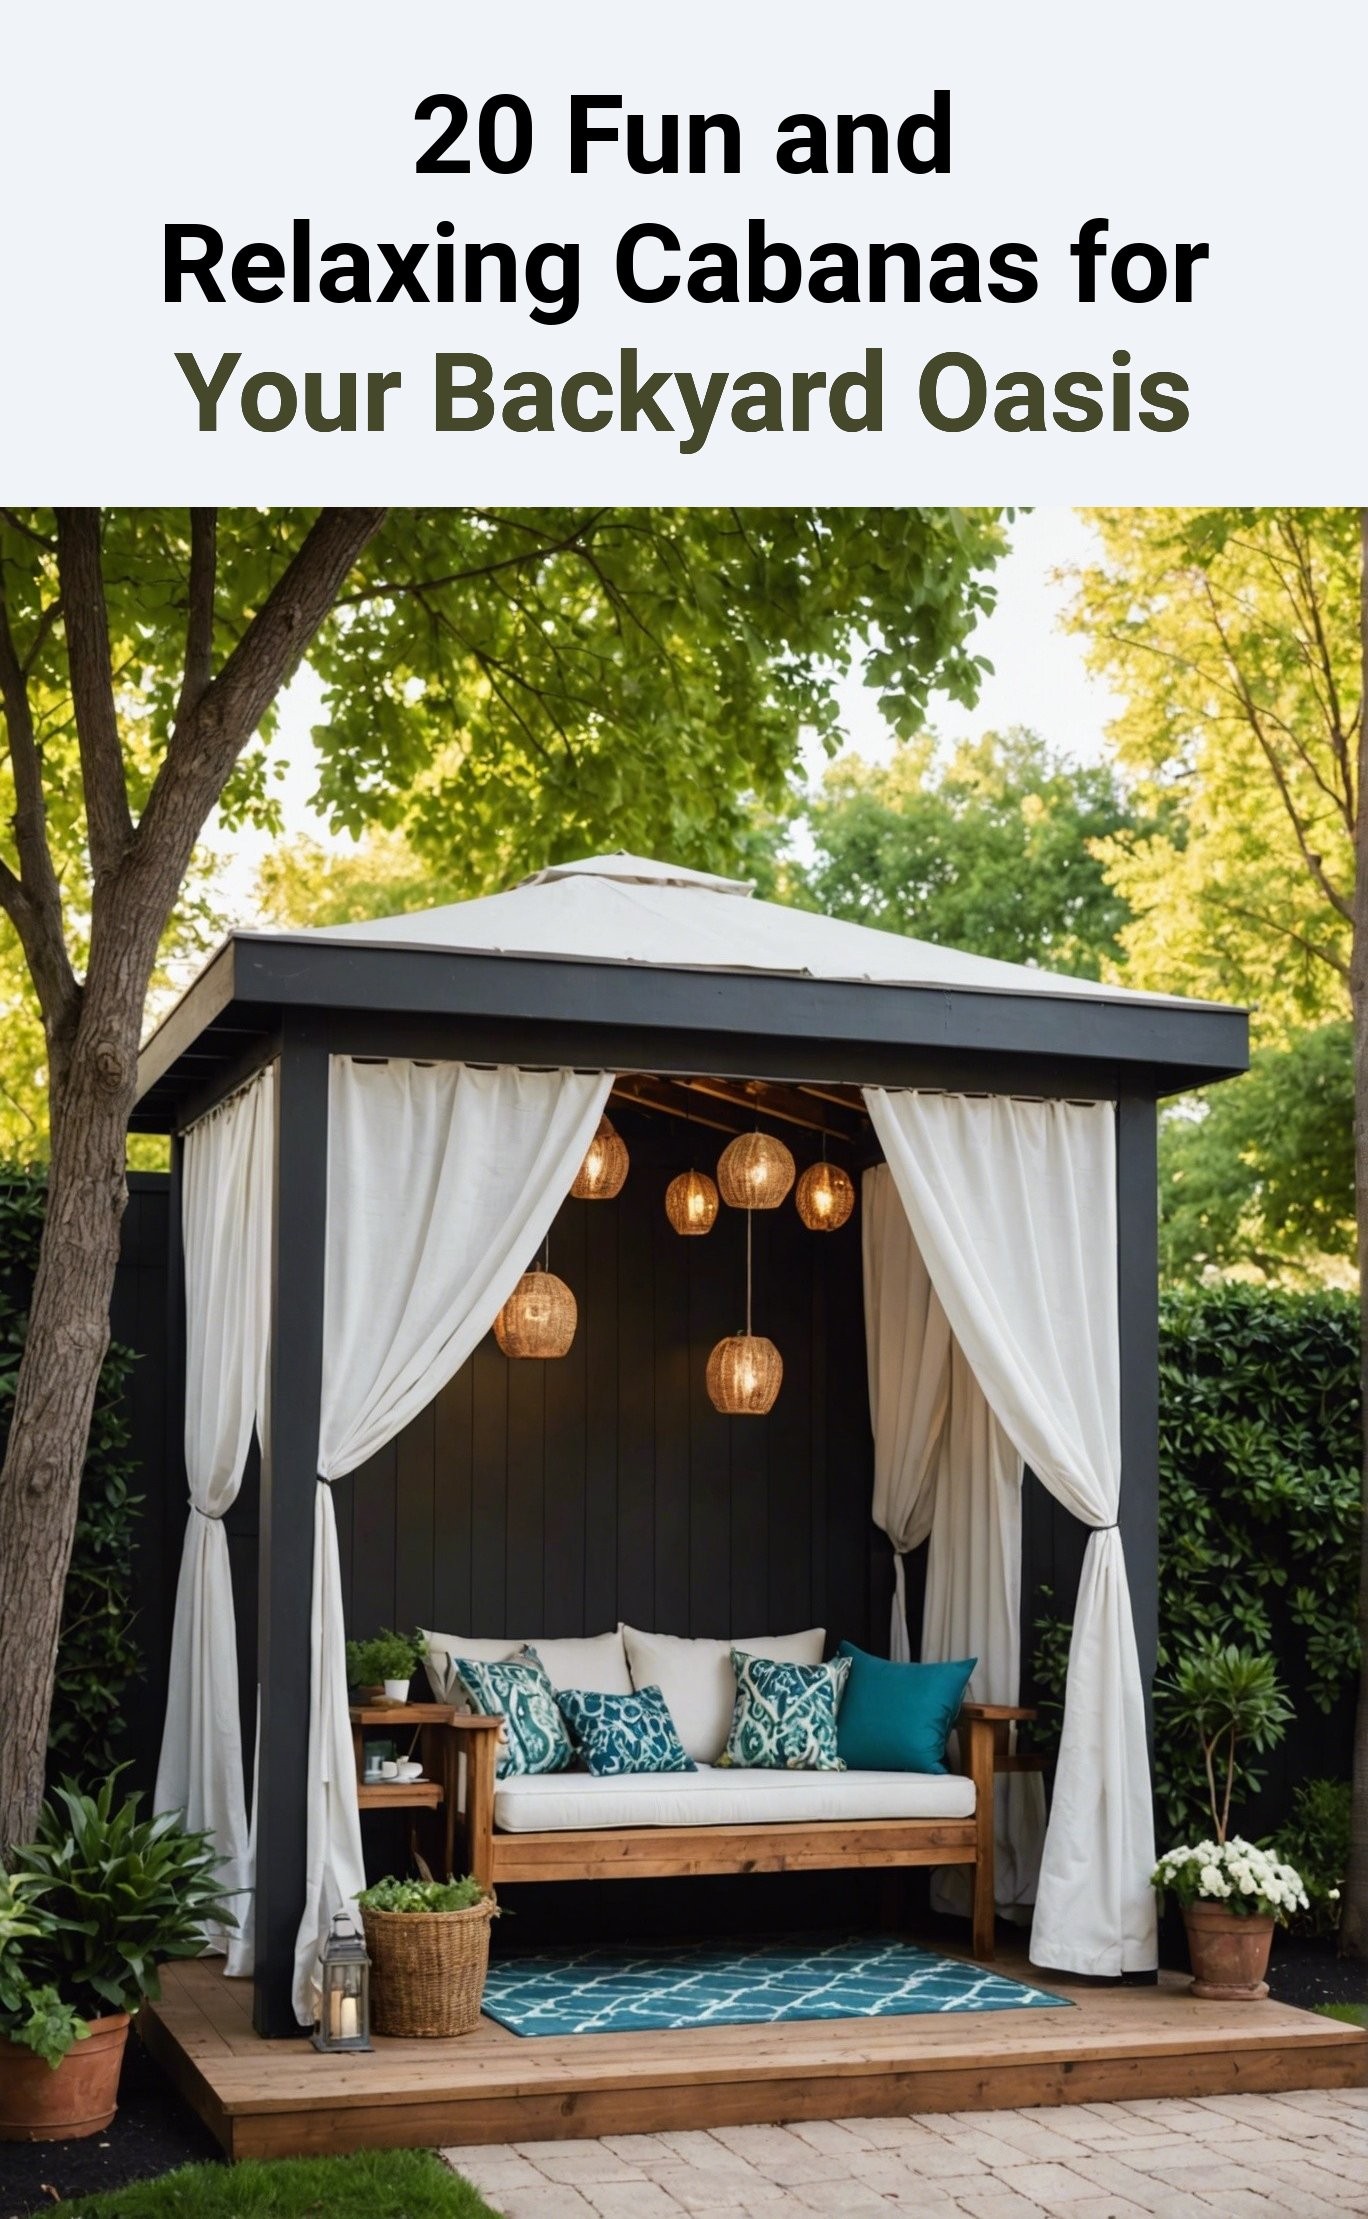 20 Fun and Relaxing Cabanas for Your Backyard Oasis